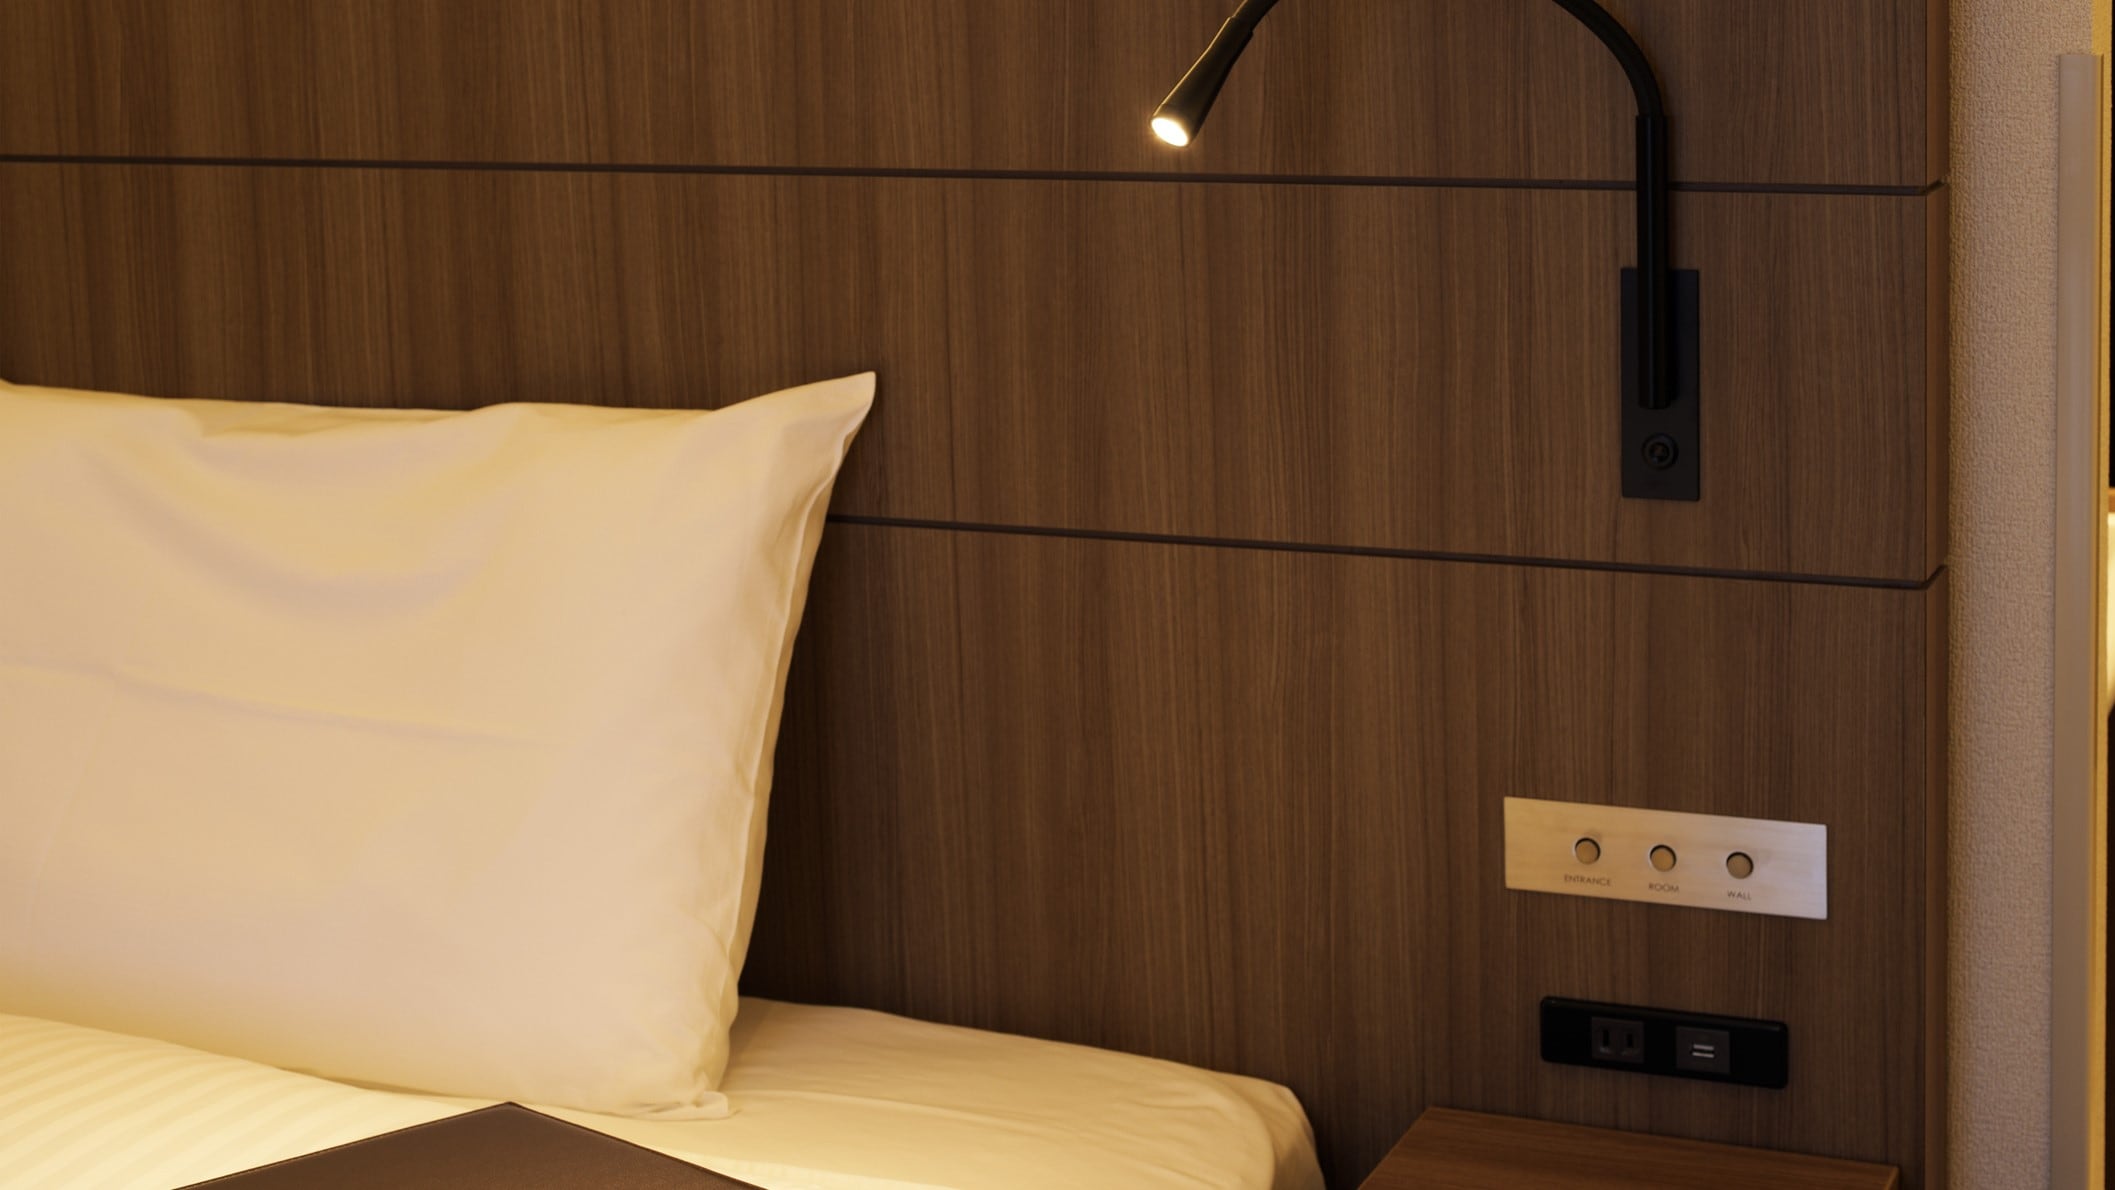 Room night lamp